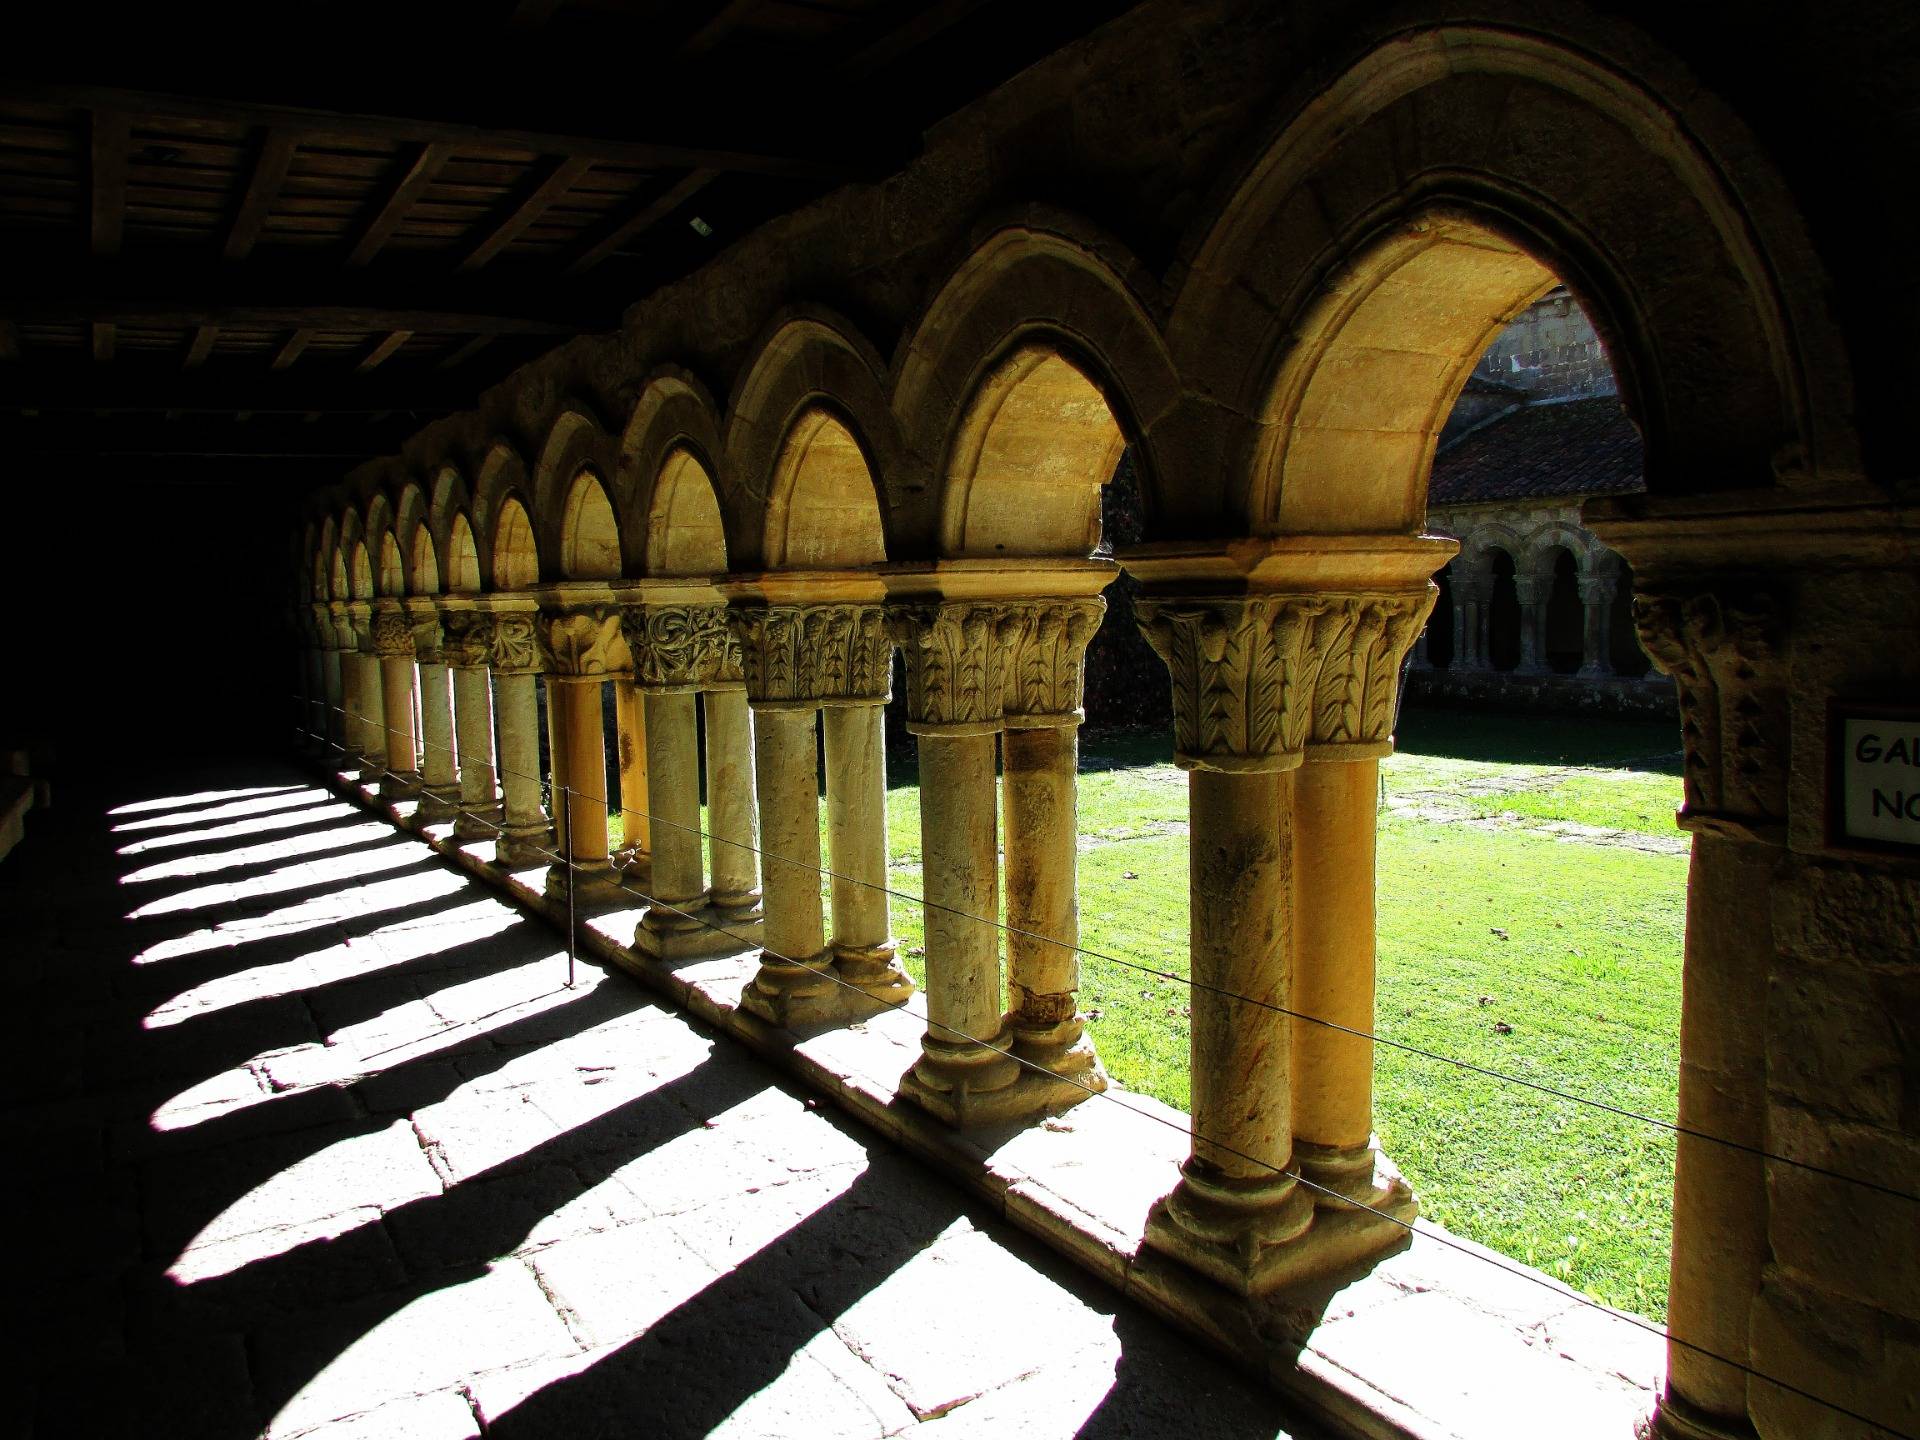 Mysterious places of Cantabria: the Collegiate Church of Santillana del Mar